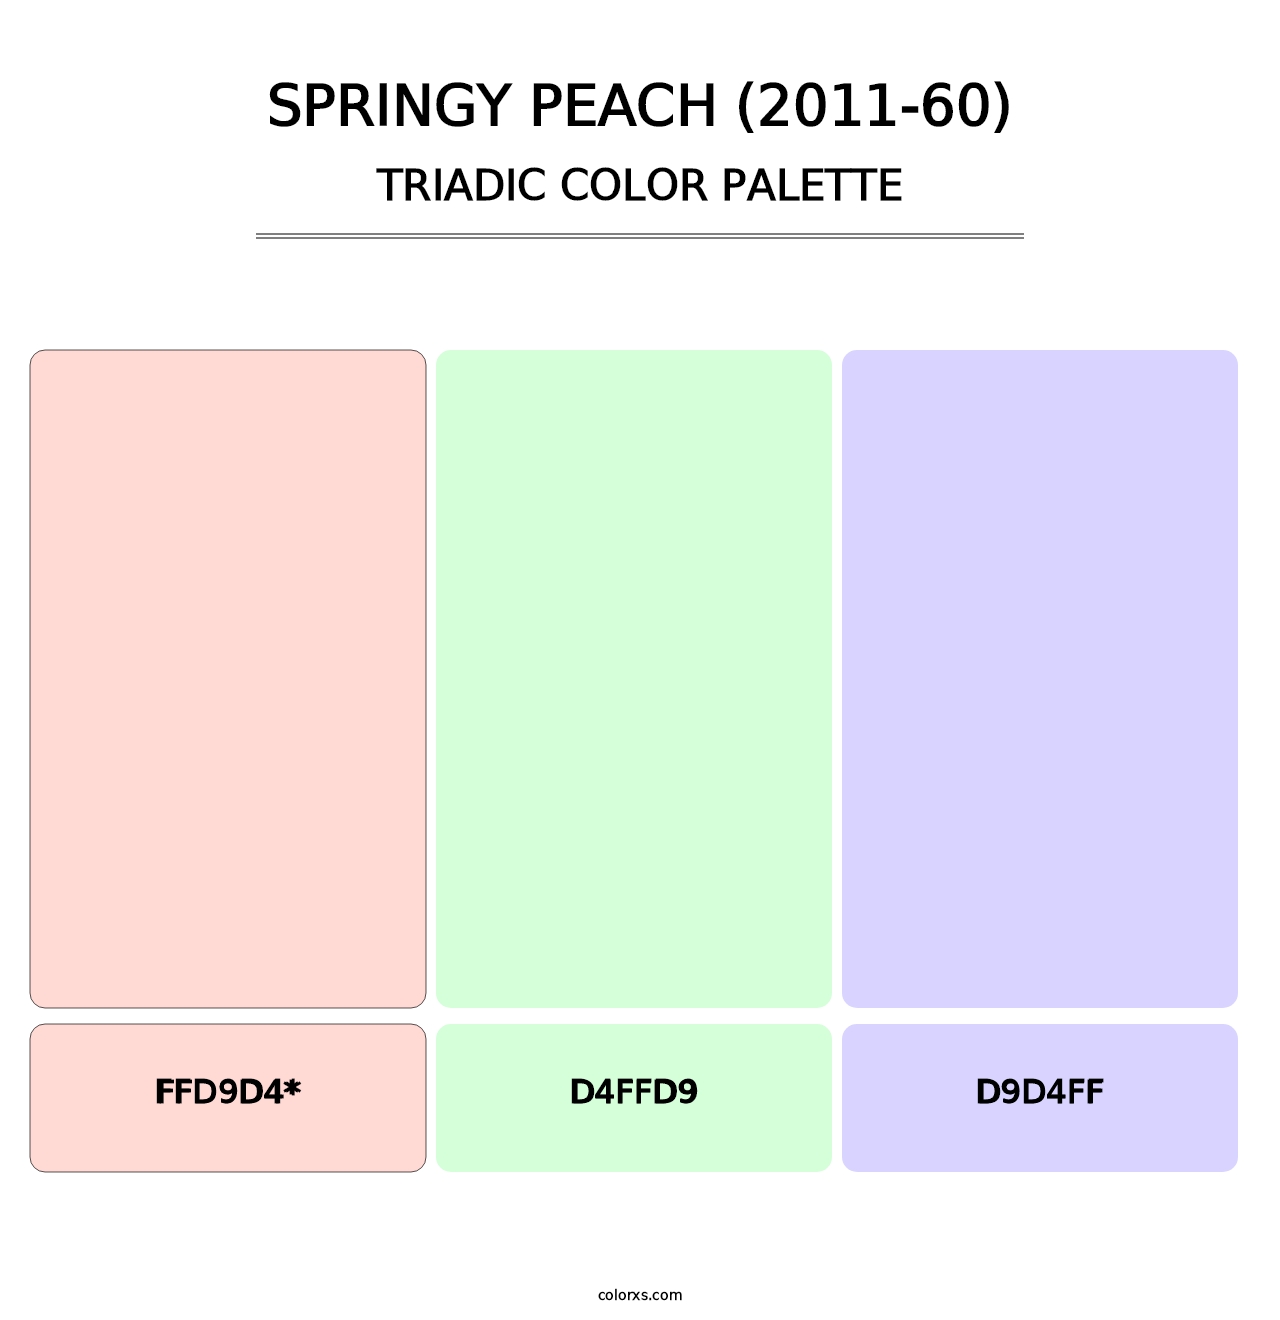 Springy Peach (2011-60) - Triadic Color Palette